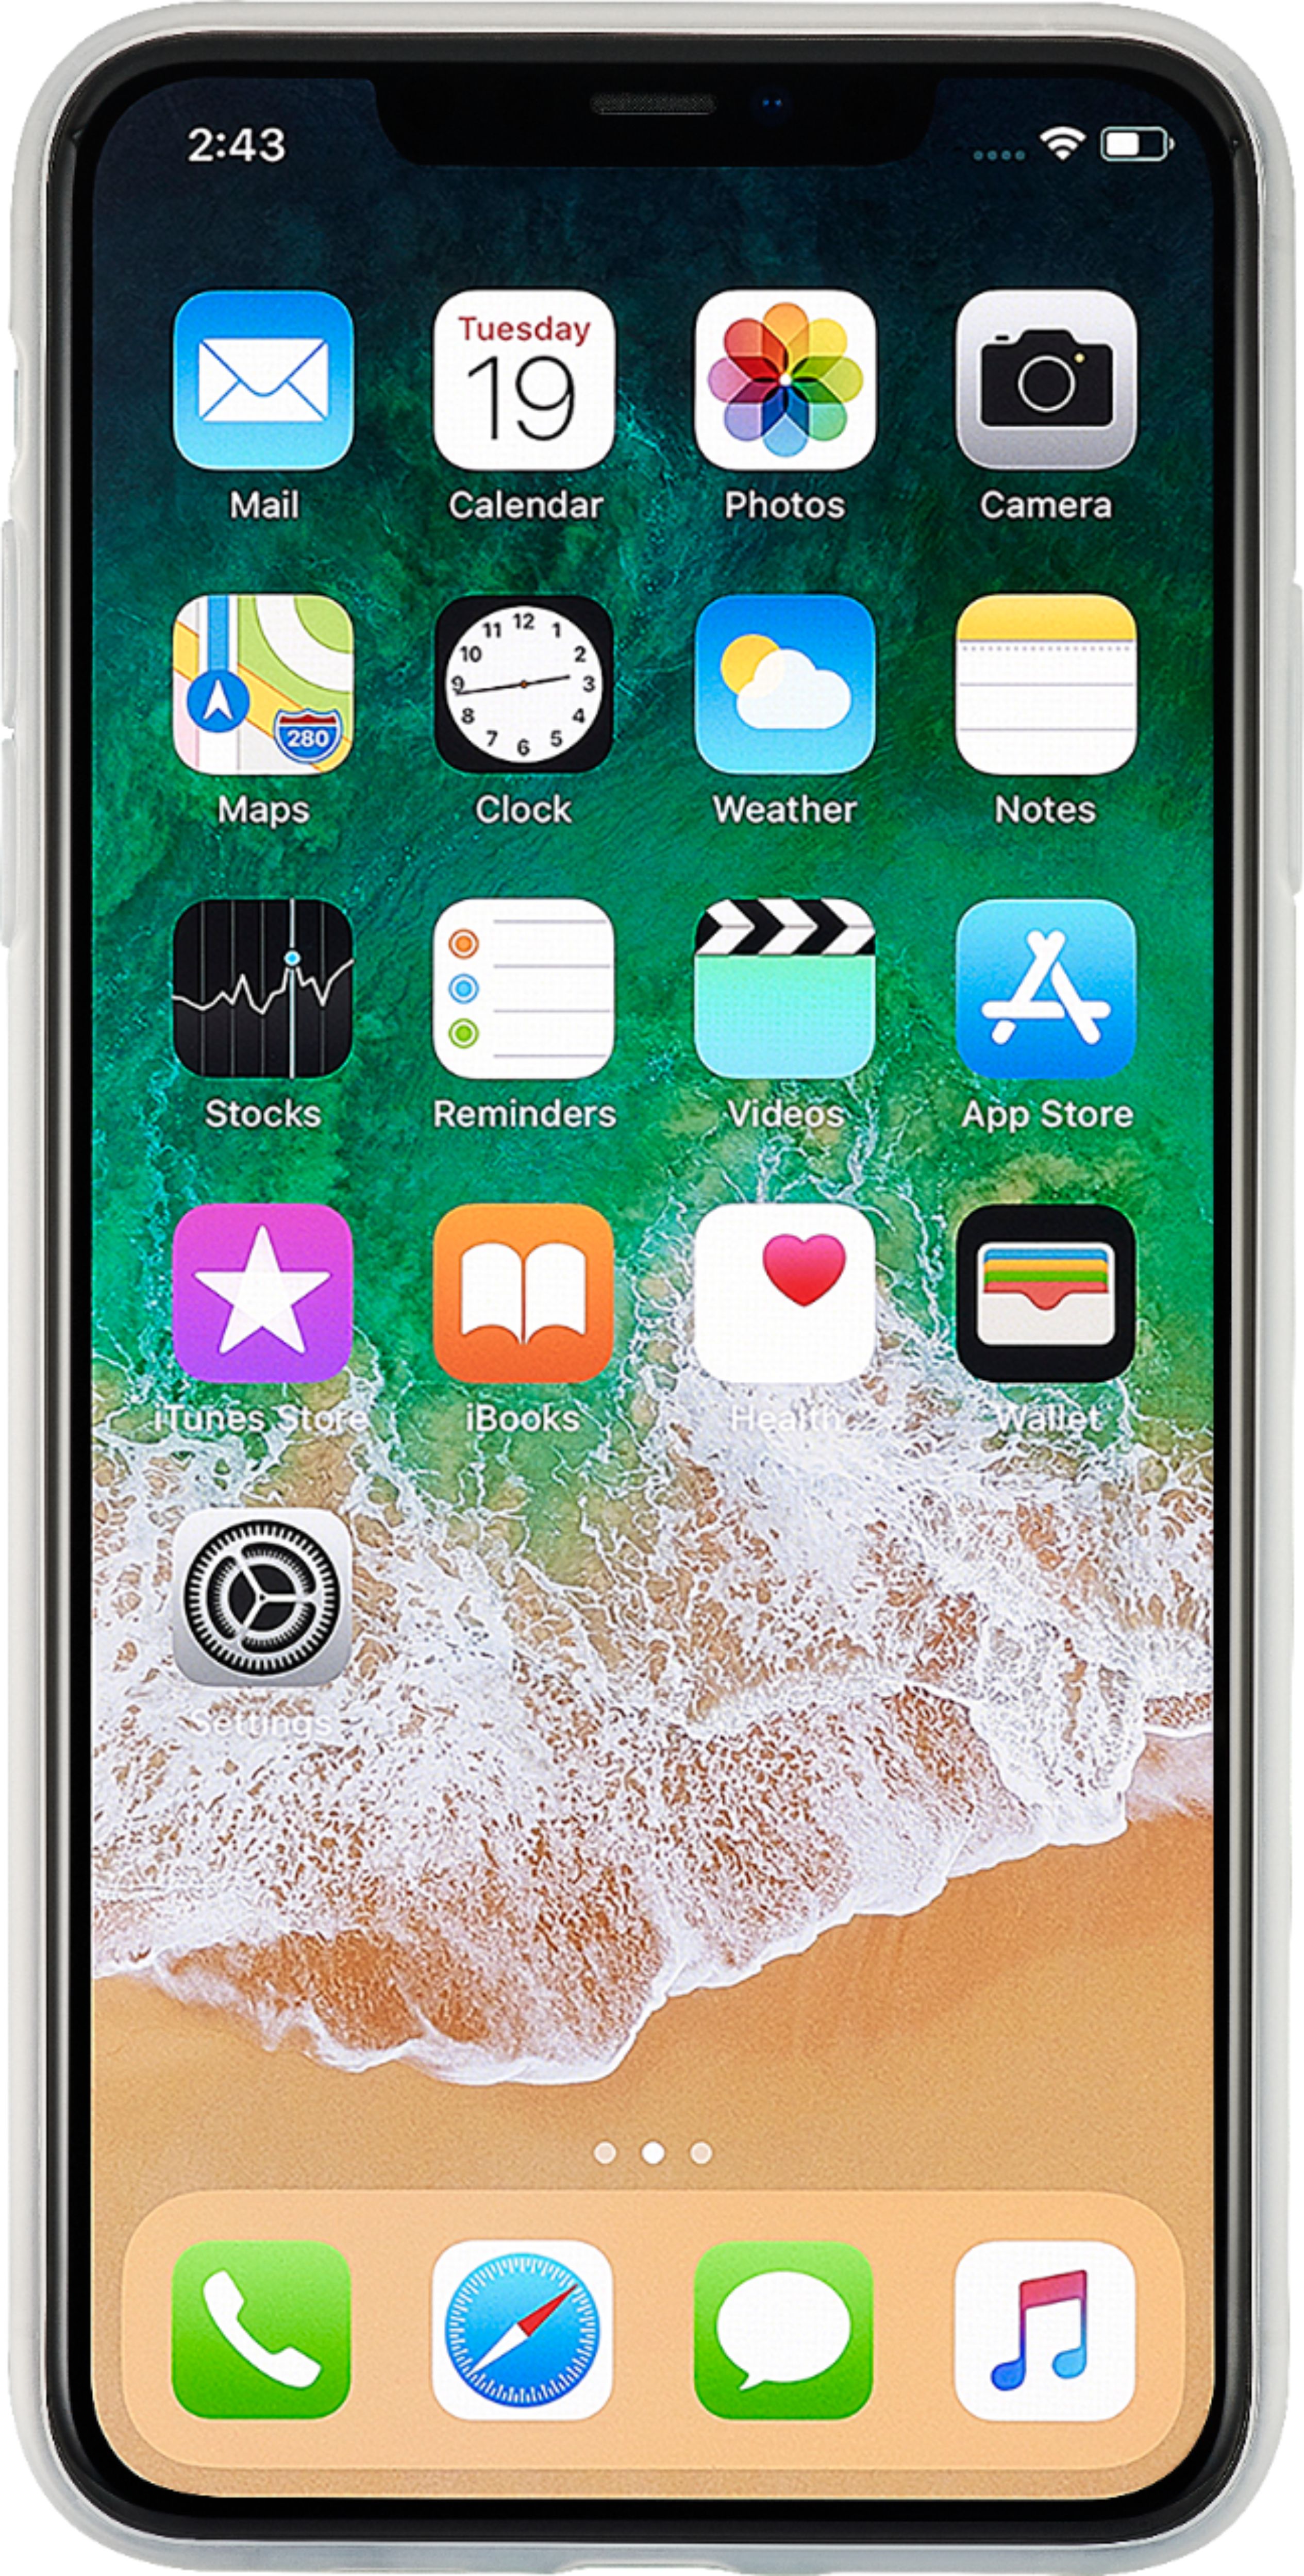 FULLYIDEA Back Cover for Apple Iphone 11 Pro Max, supreme